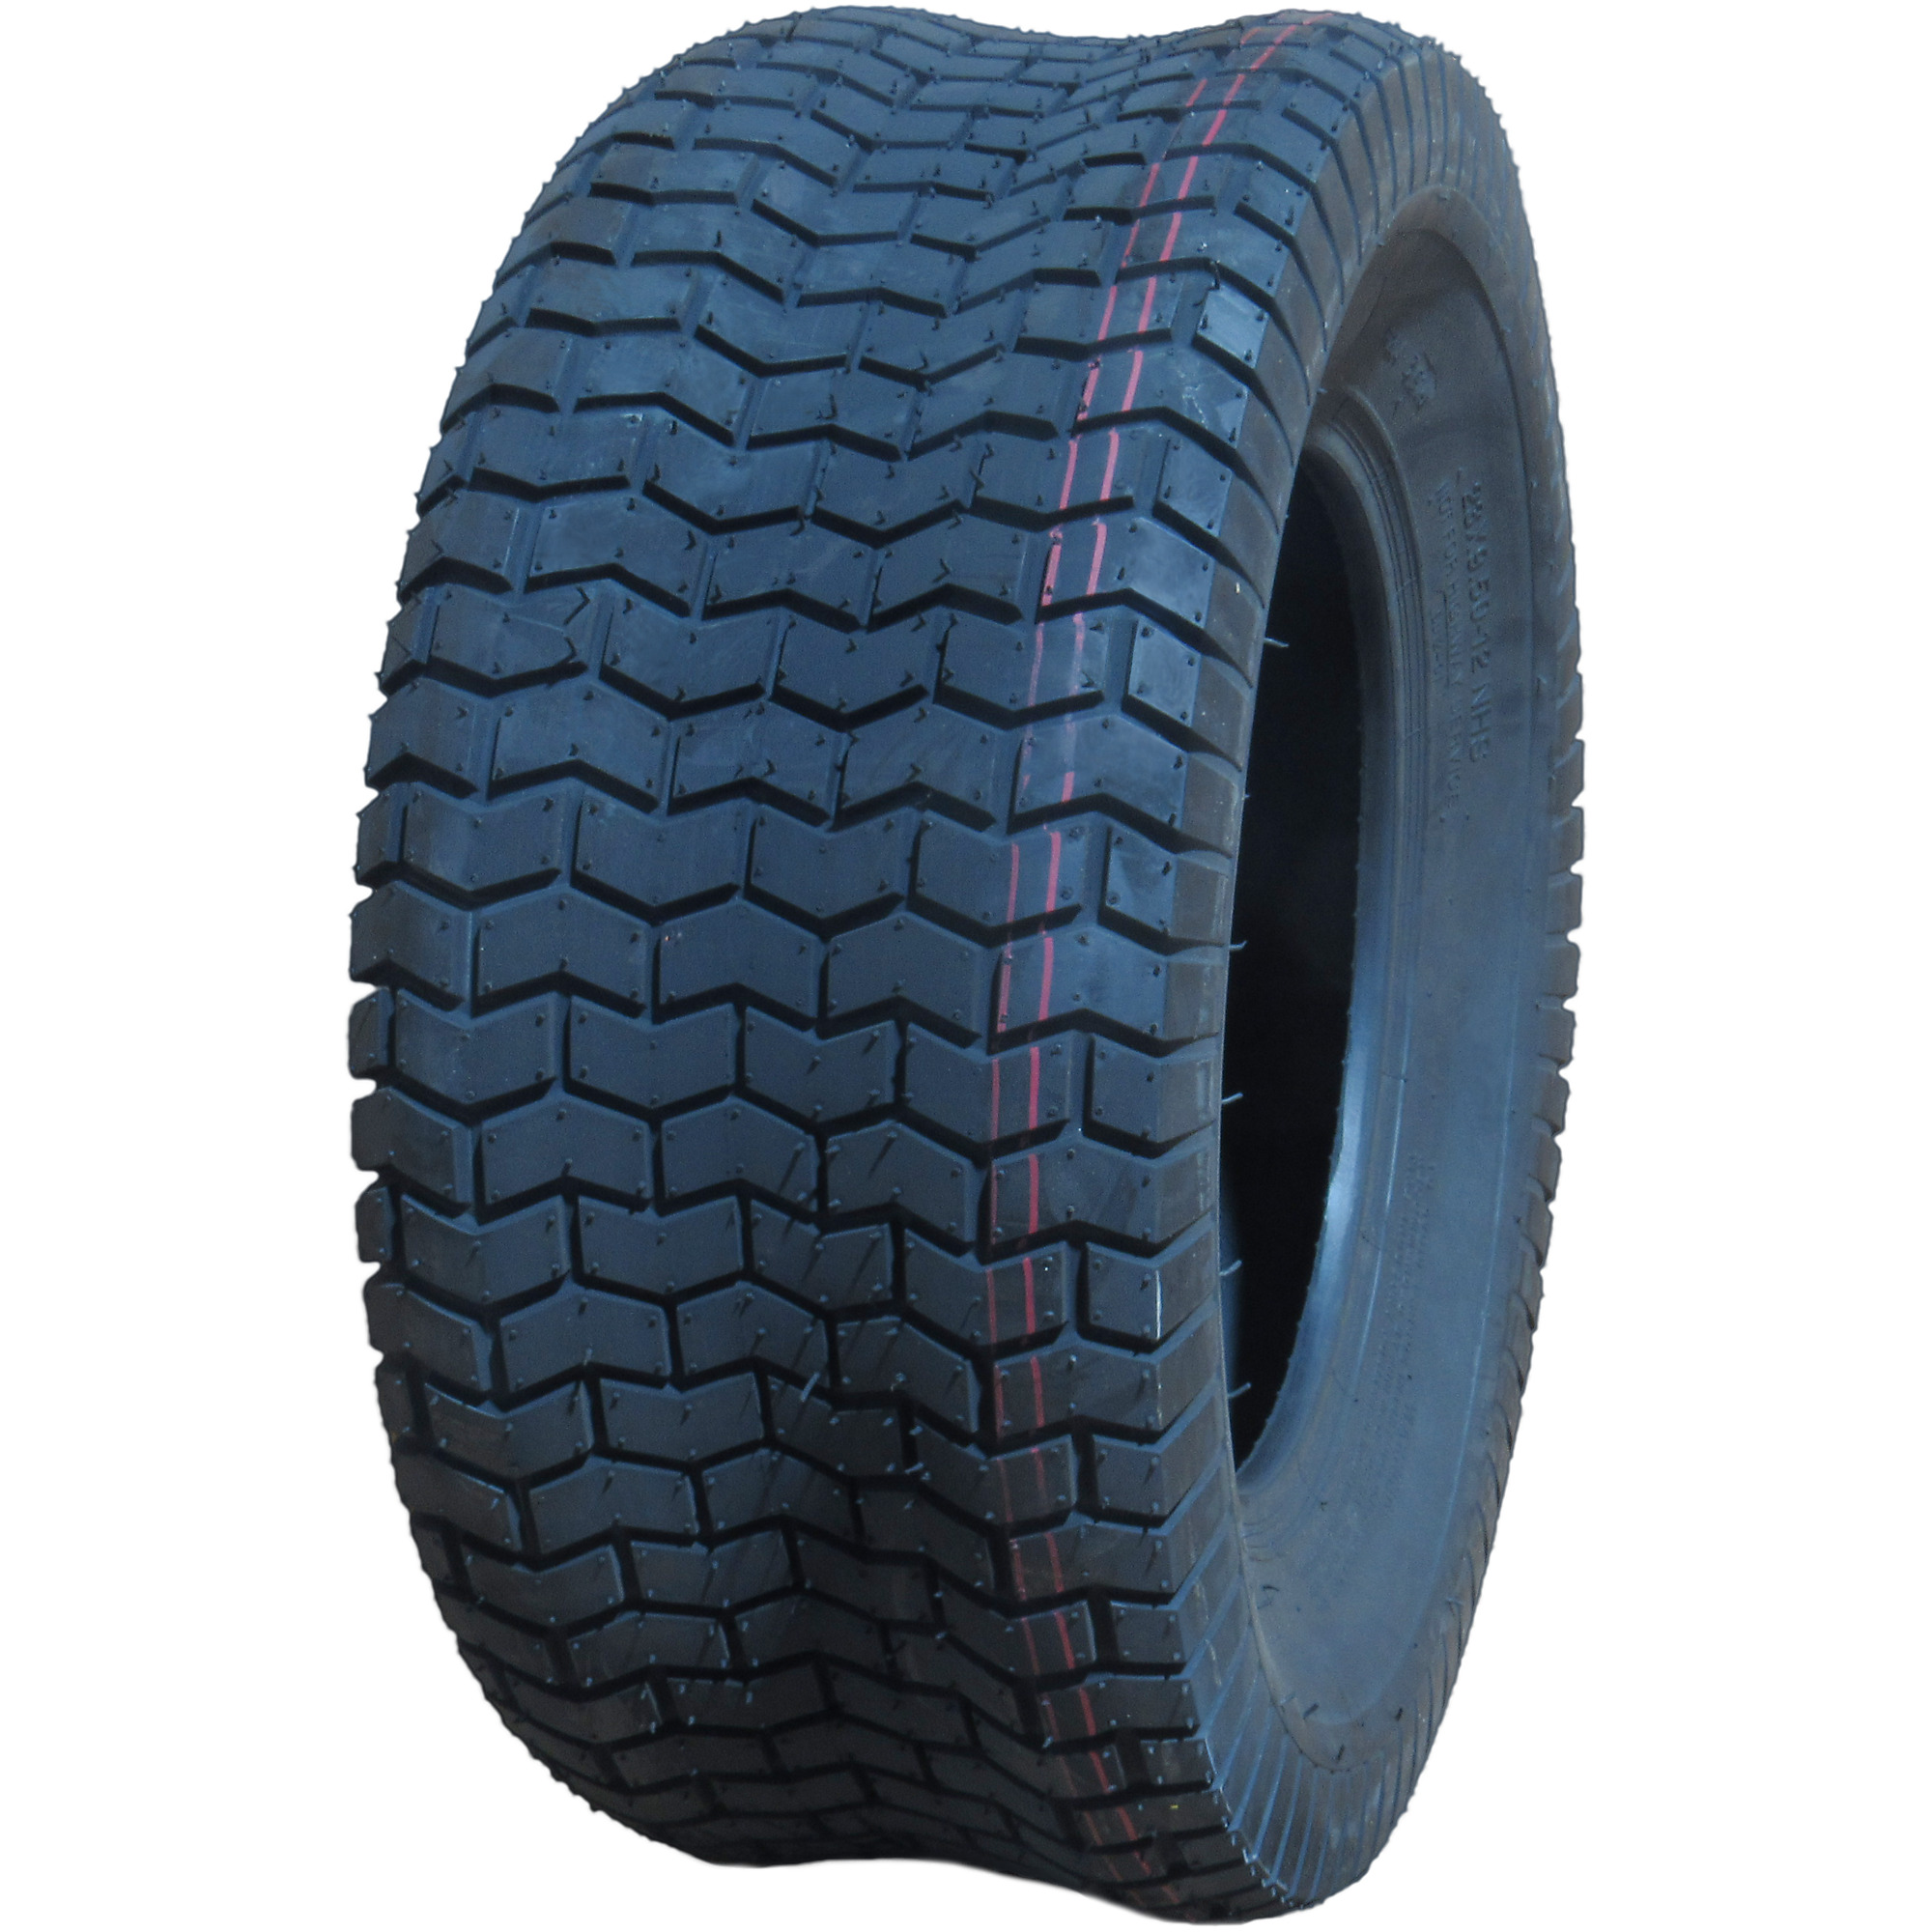 HI-RUN, Lawn Garden Tire, SU12 Turf II, Tire Size 23X9.5-12 Load Range Rating B, Model WD1182